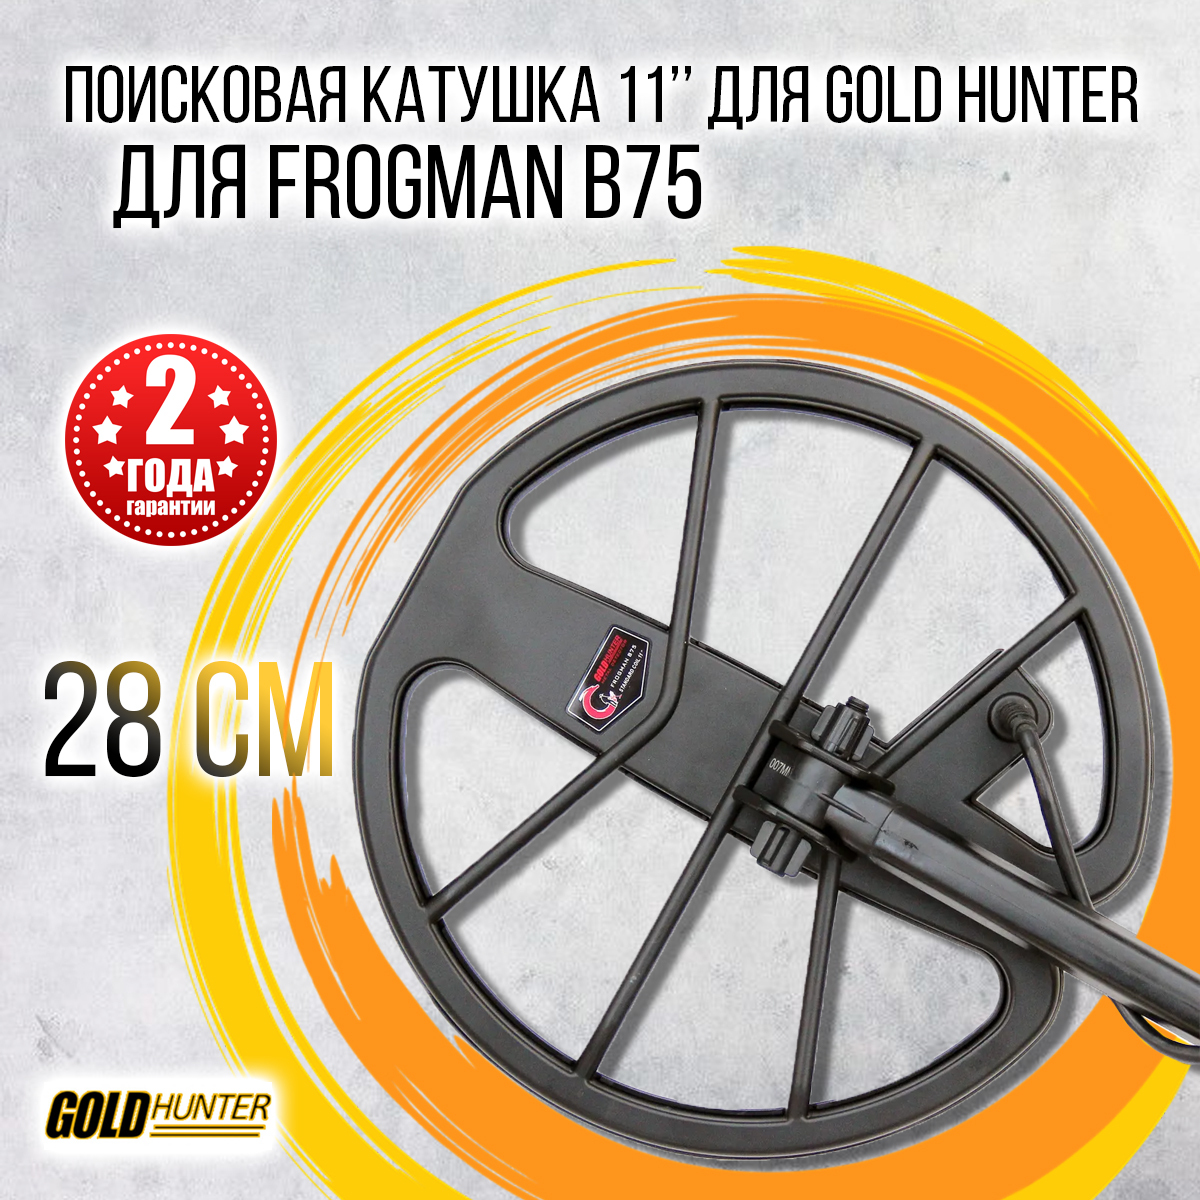 Голд хантер б 75. Металлоискатель Gold Hunter b75. Поисковые катушки для Goĺd Hunter Frogman b 75. Катушка на металлоискатель Голд Хантер b75. Gold Hunter Frogman b75.